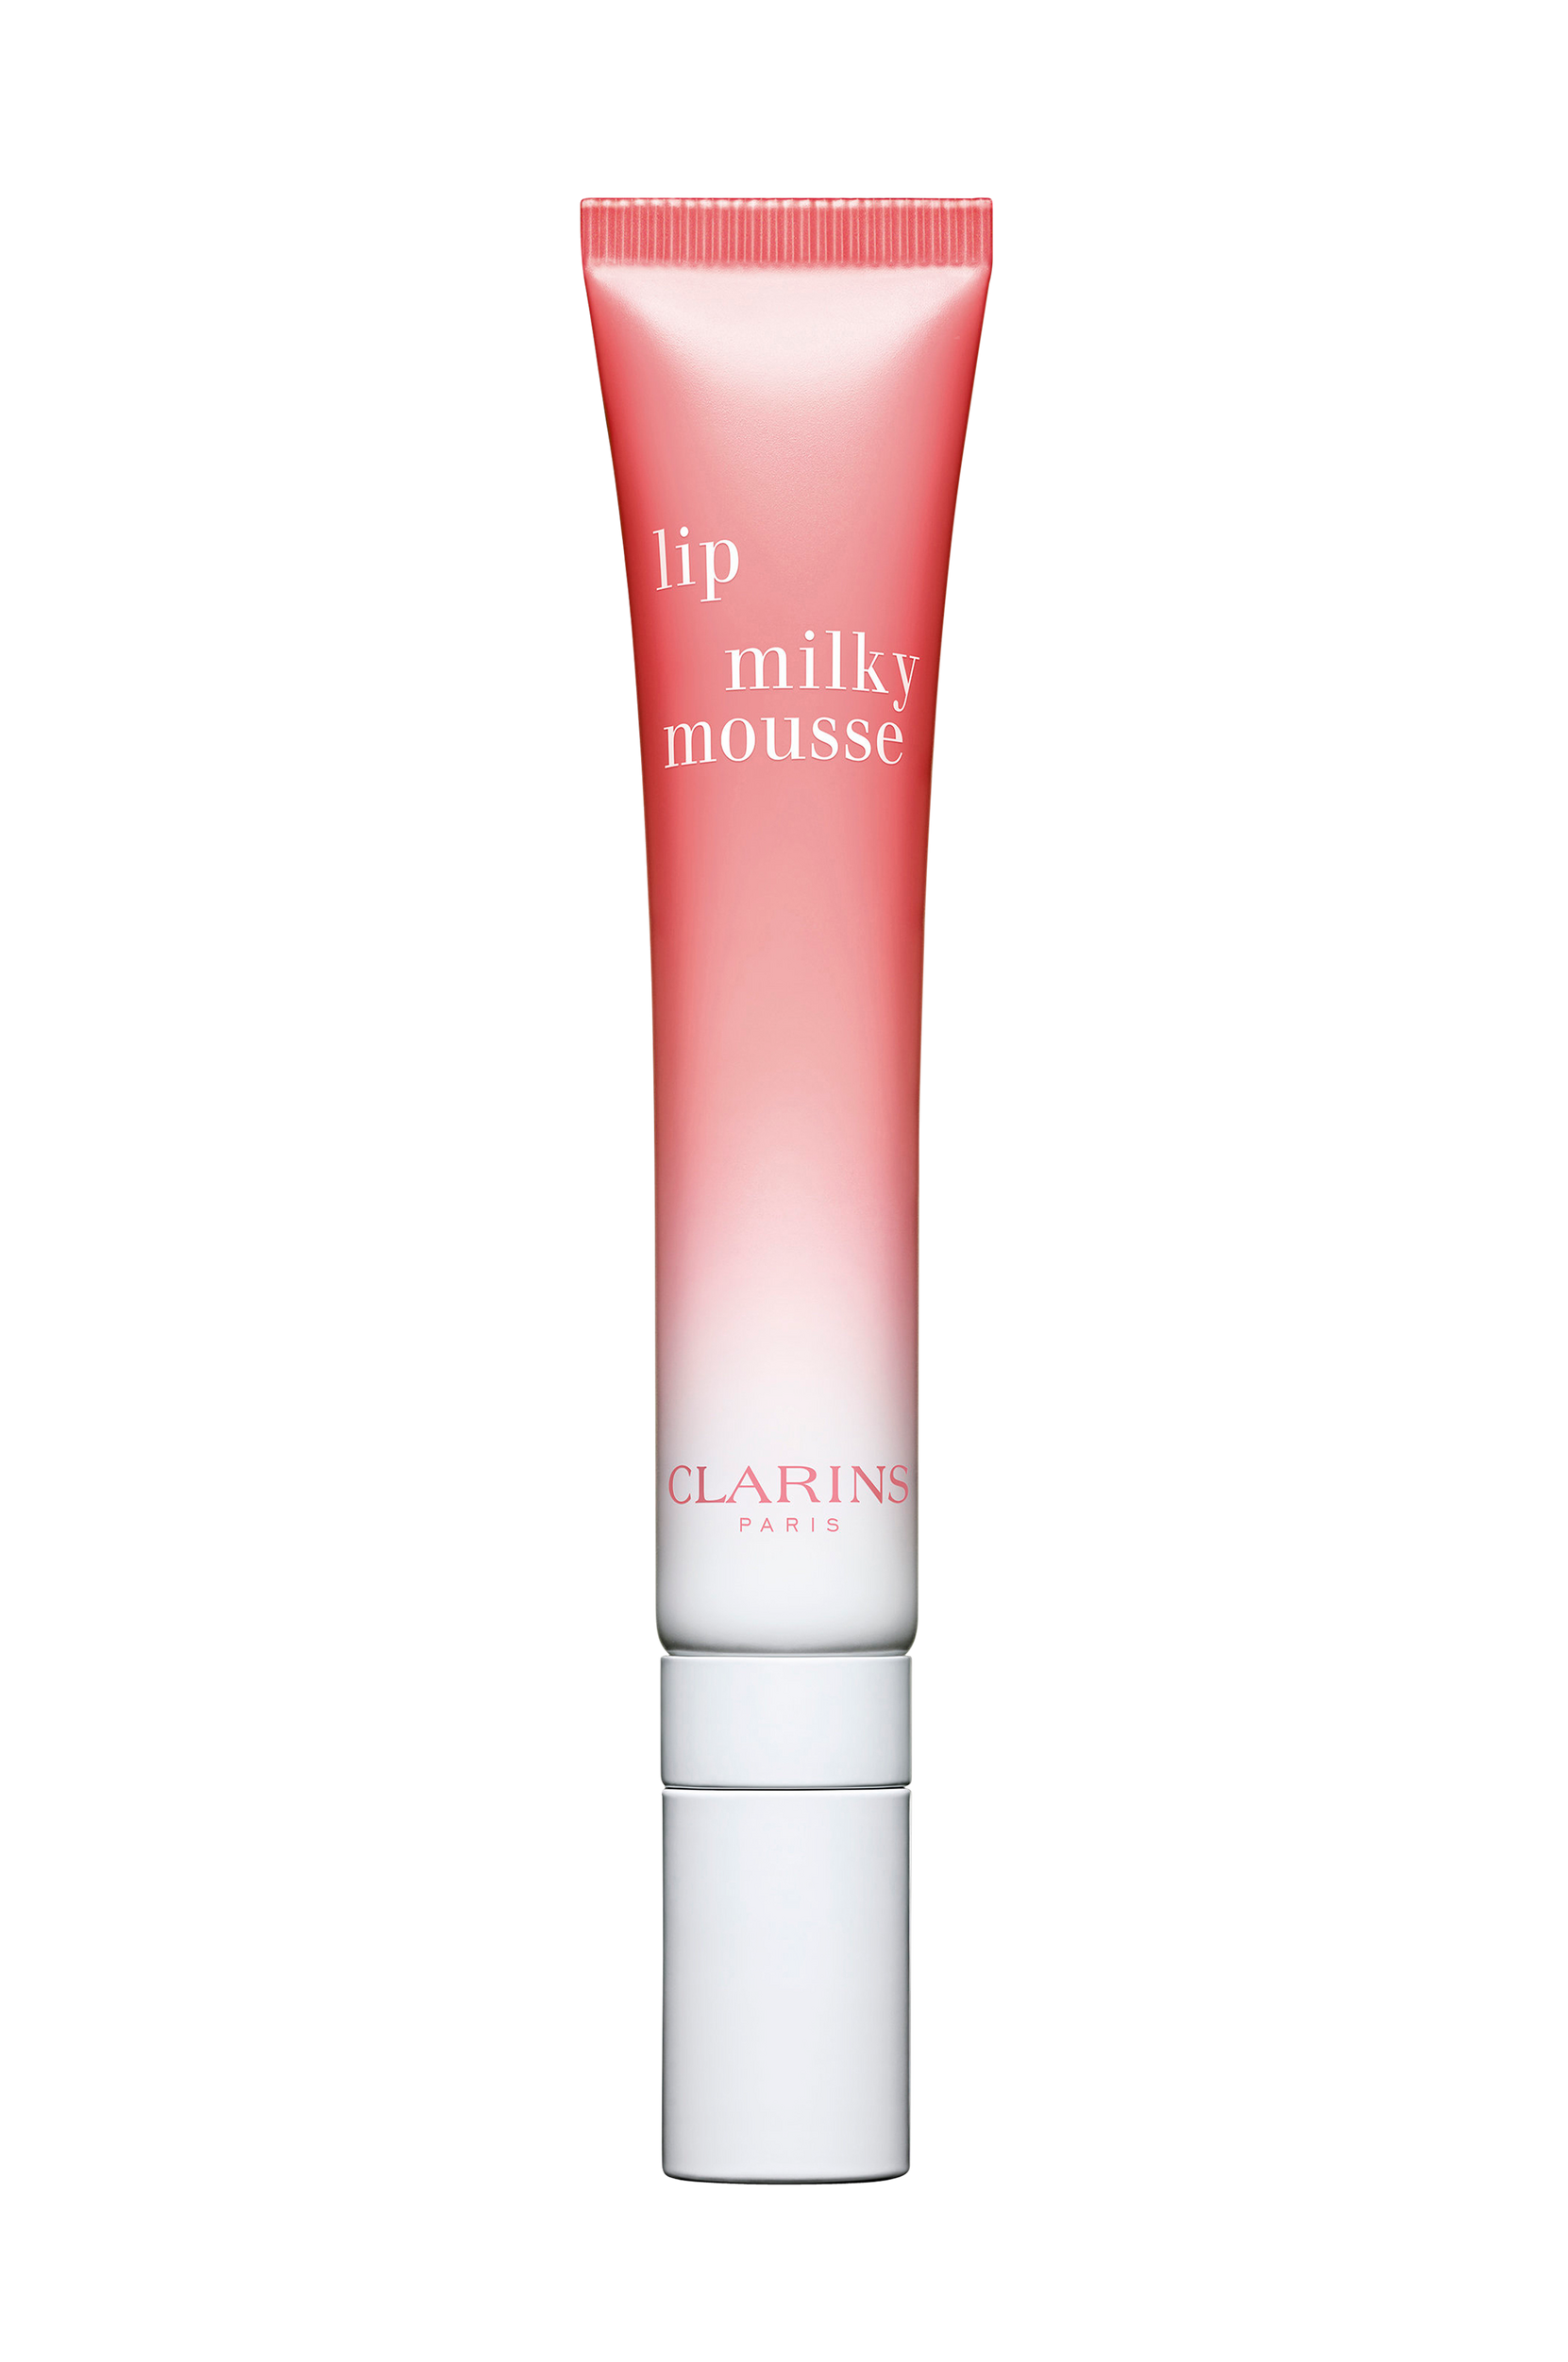 Lip Milky Mousse 10 ml, Clarins